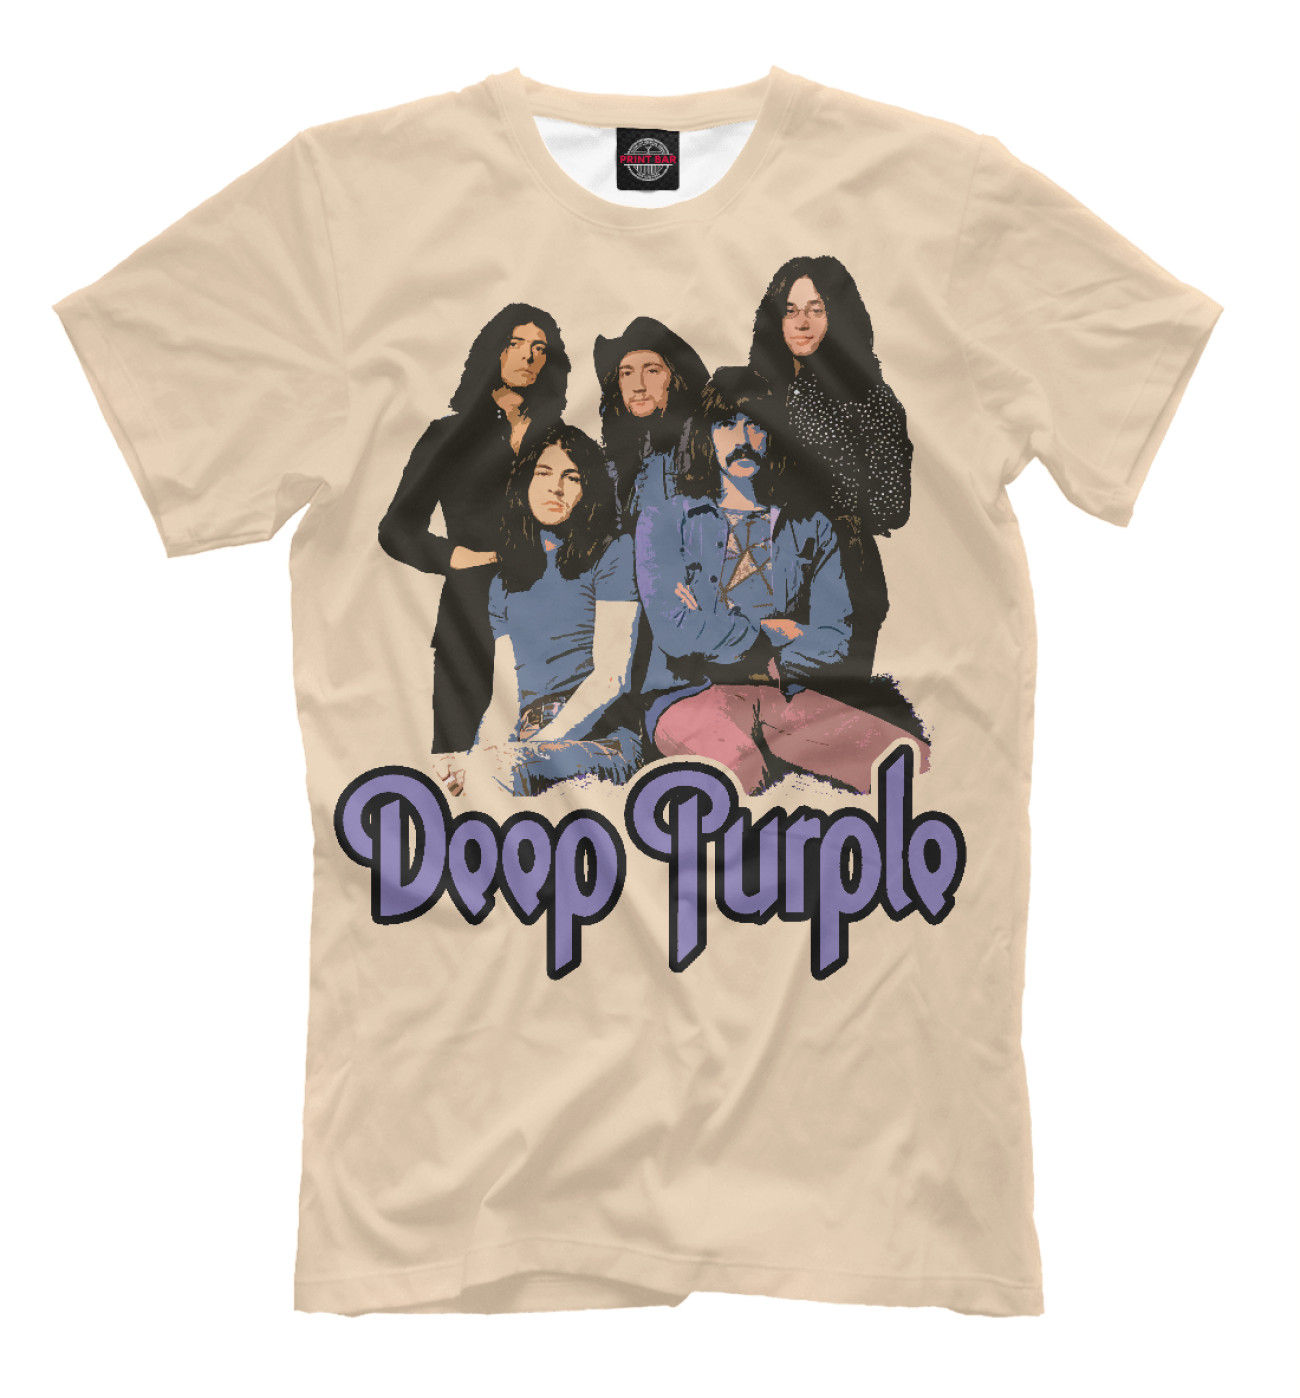 Мужская Футболка Deep Purple, артикул: PUR-897386-fut-2